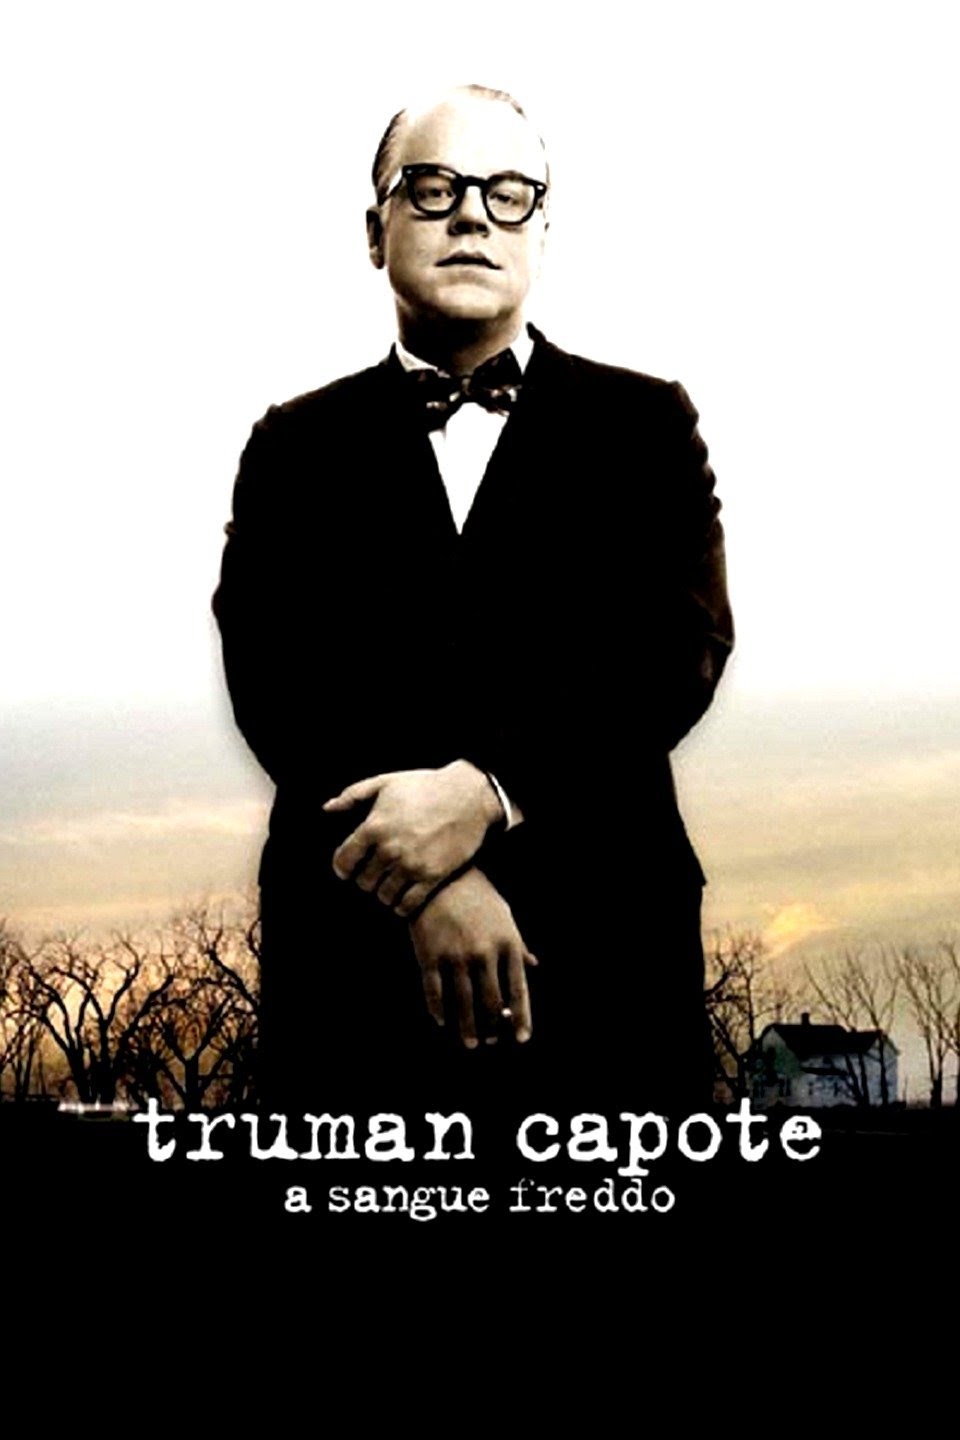 Truman Capote – A sangue freddo [HD] (2005)